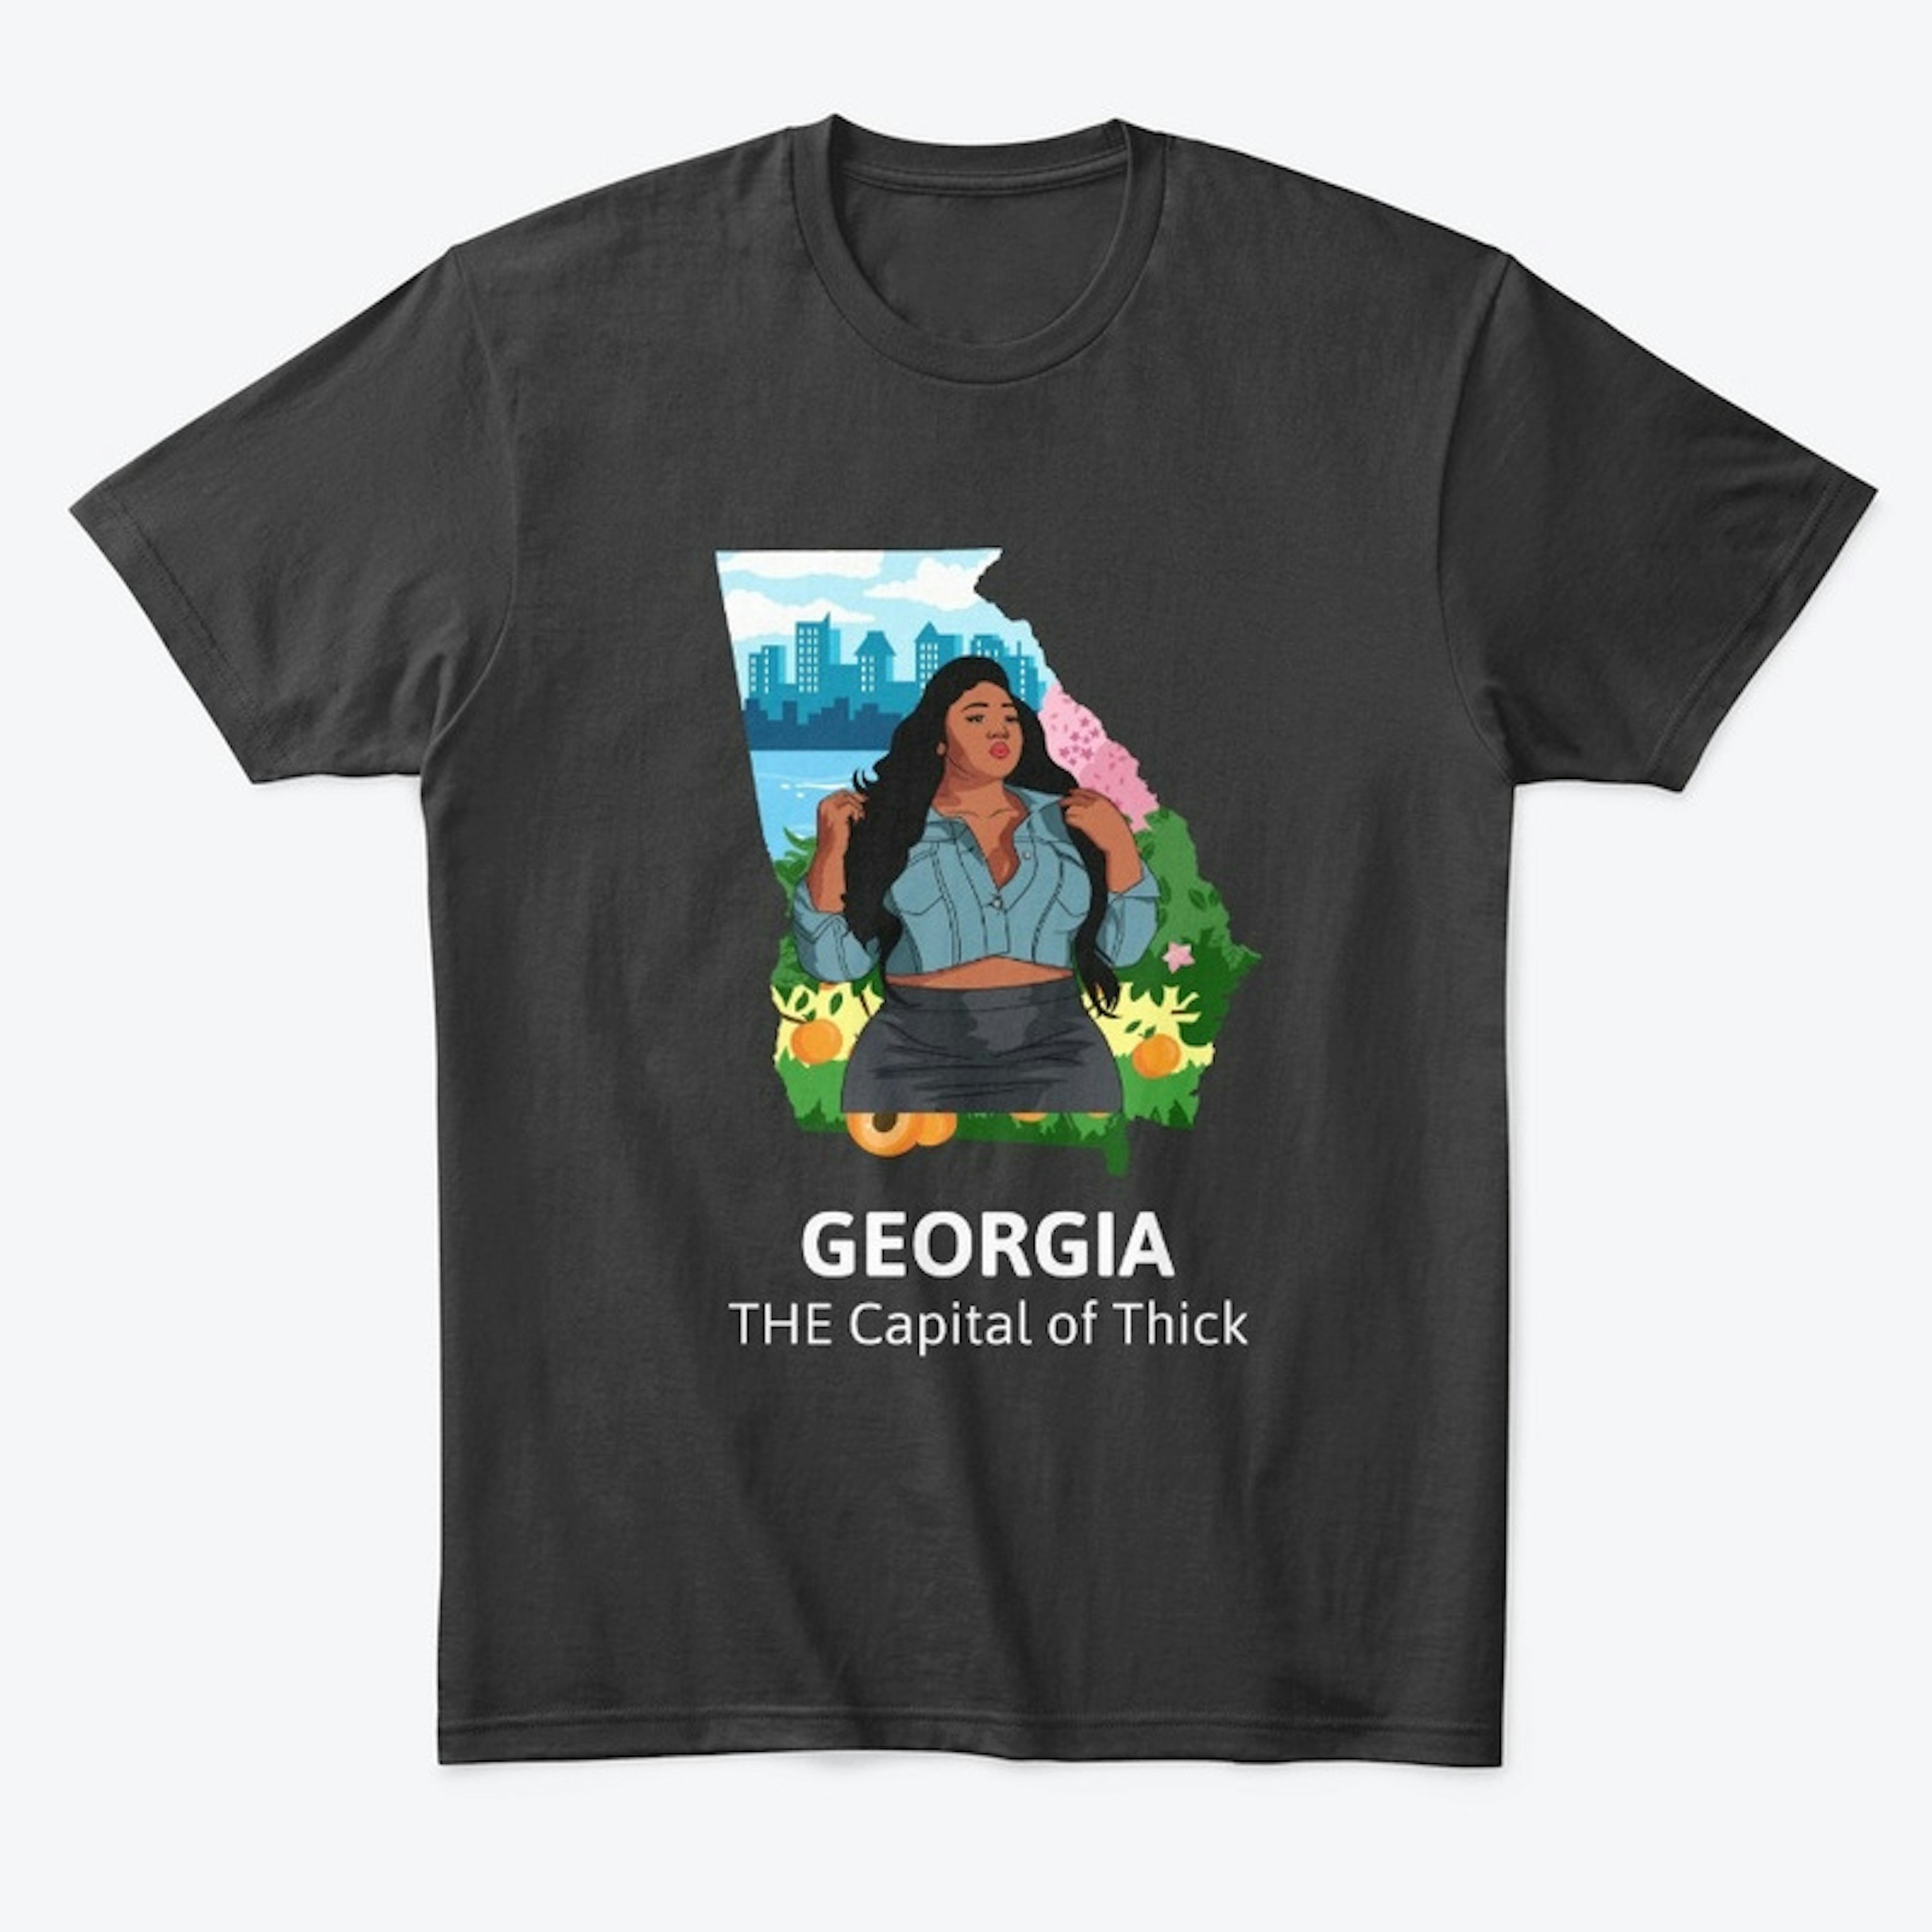 Georgia The Capital of Thick - Plus Size